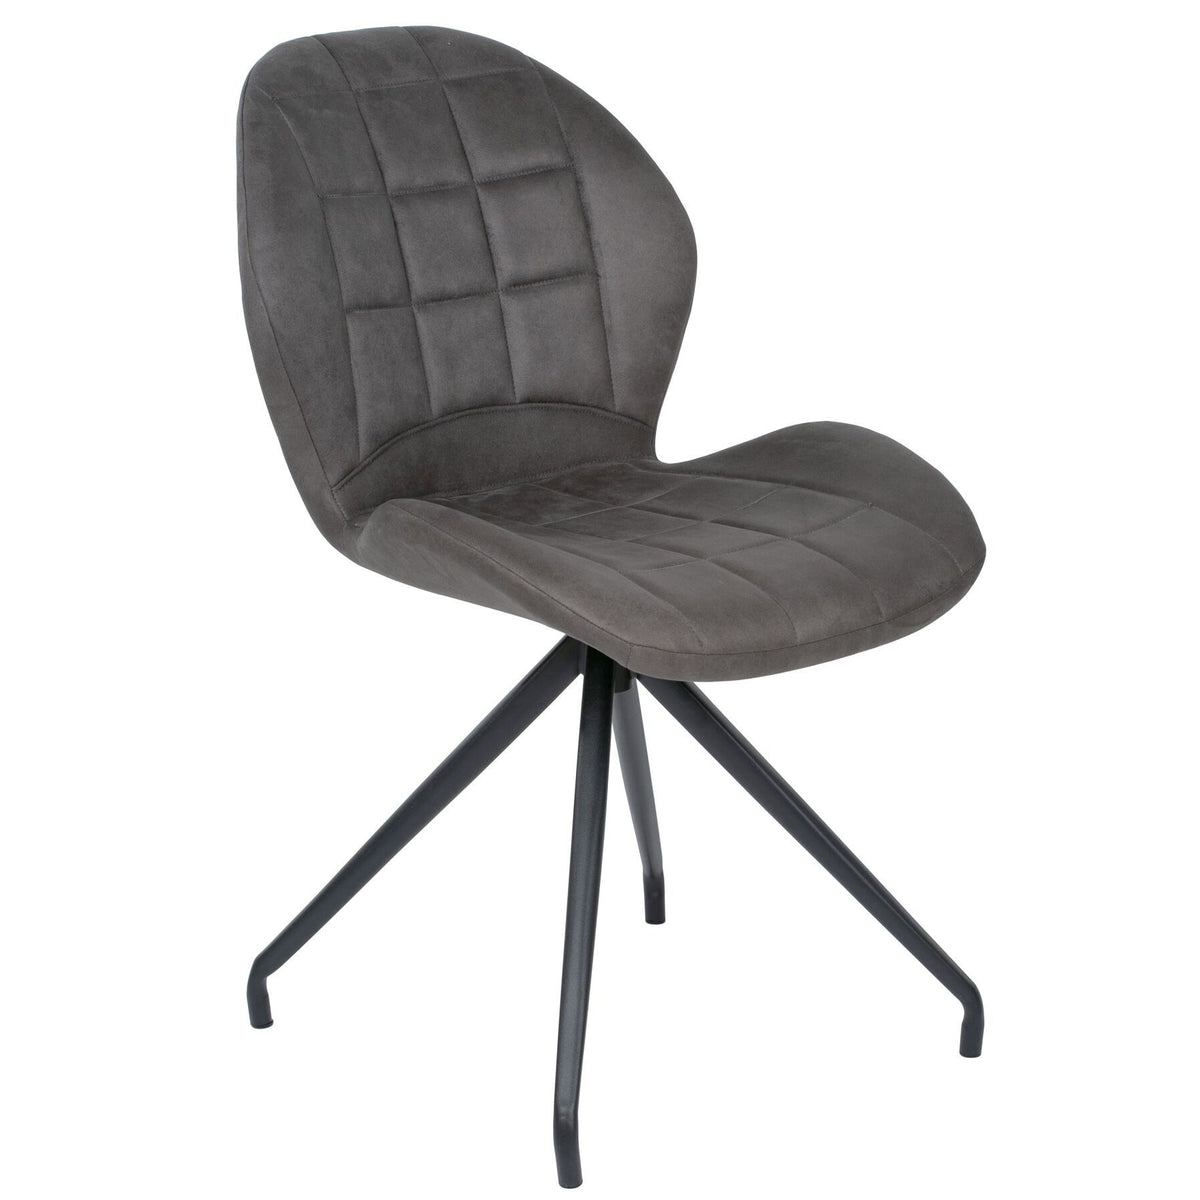 Tiger Wood Chair (Grey)